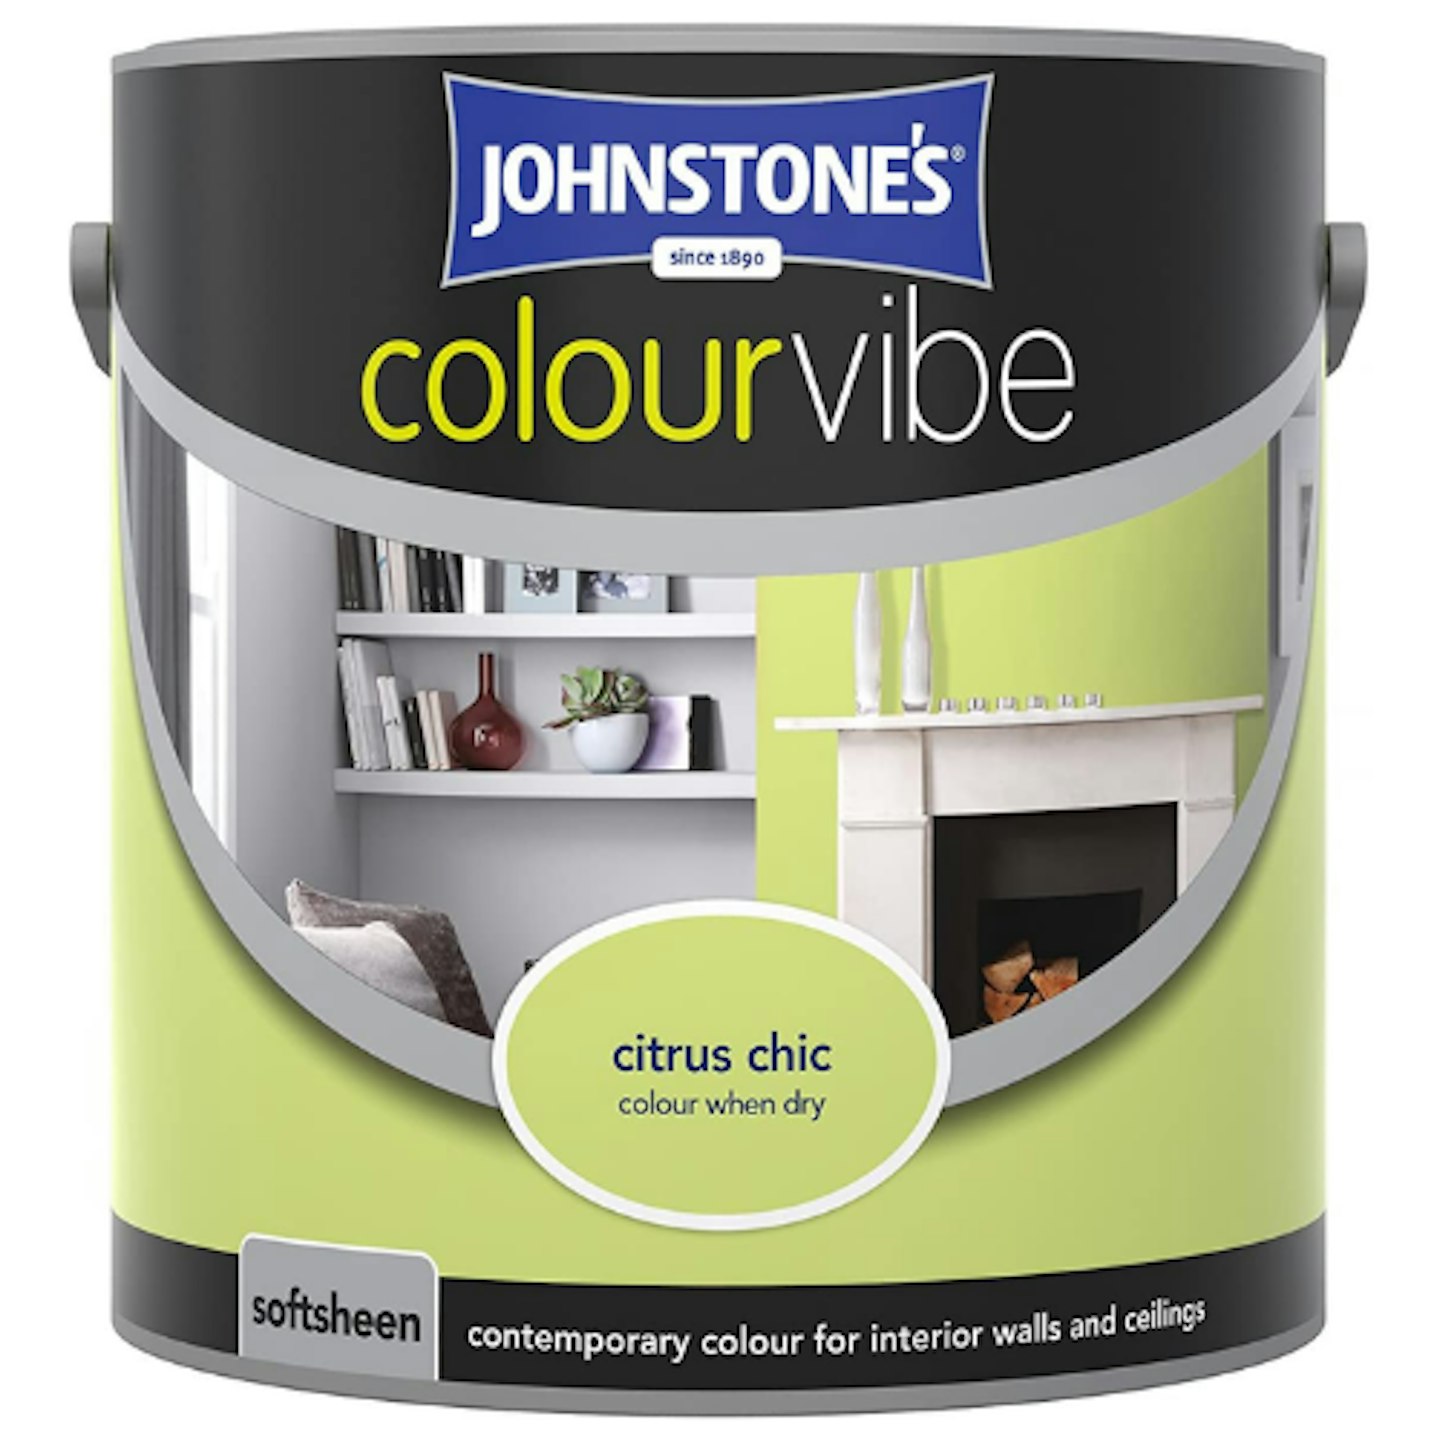 Johnstone's Citrus Chic Colour Vibe Matt Emulsion Paint, 2.5L